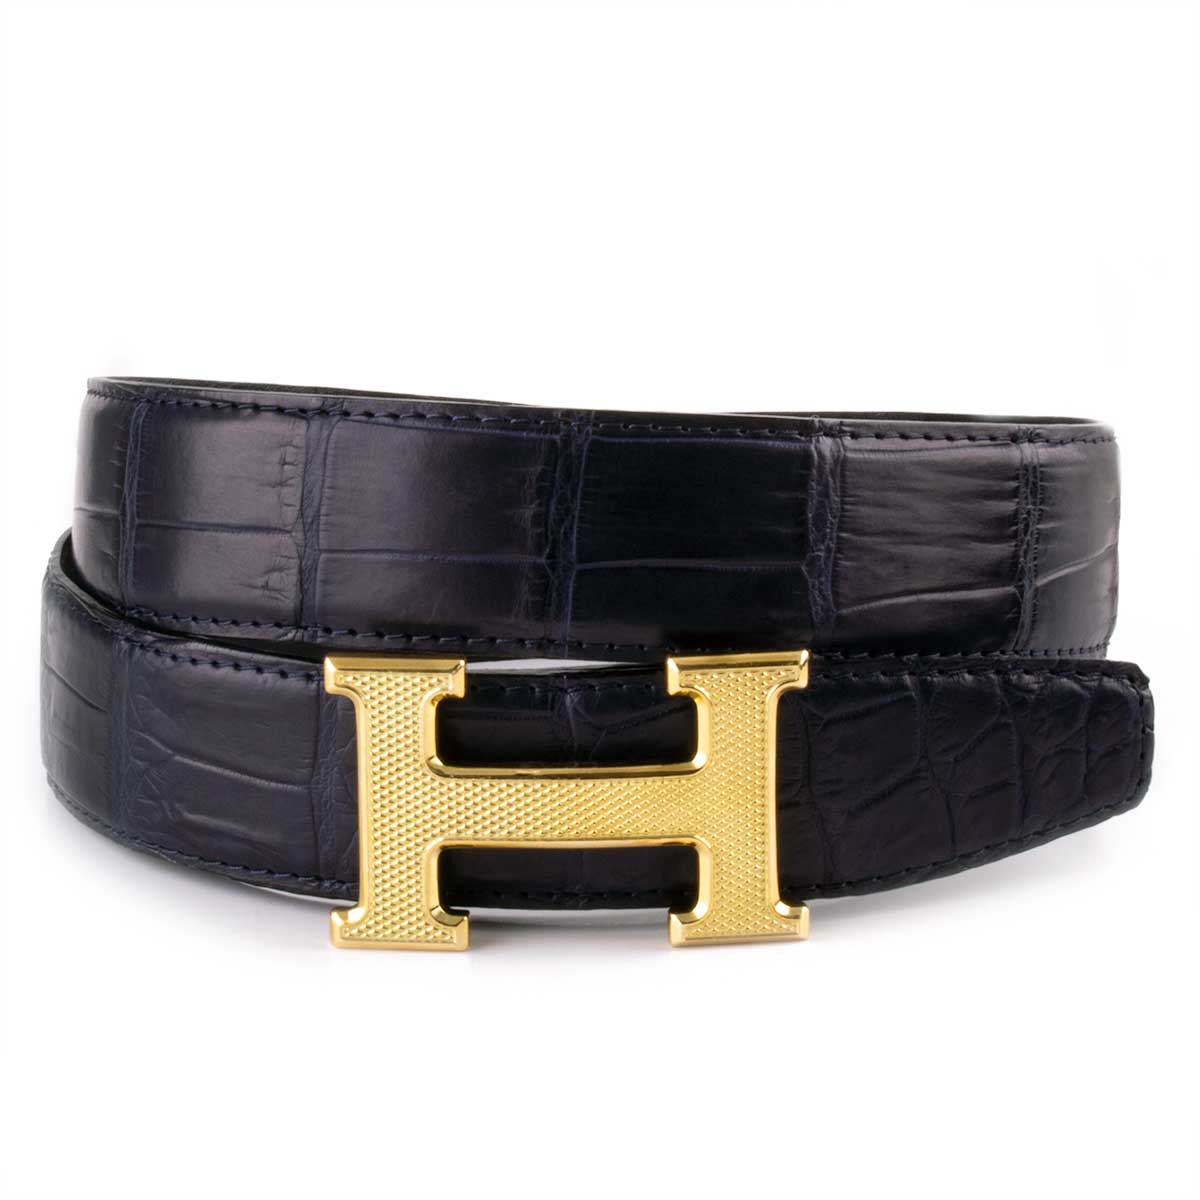 Classic leather belt with hatched effect golden "H" buckle - Alligator (black, navy blue, blue)